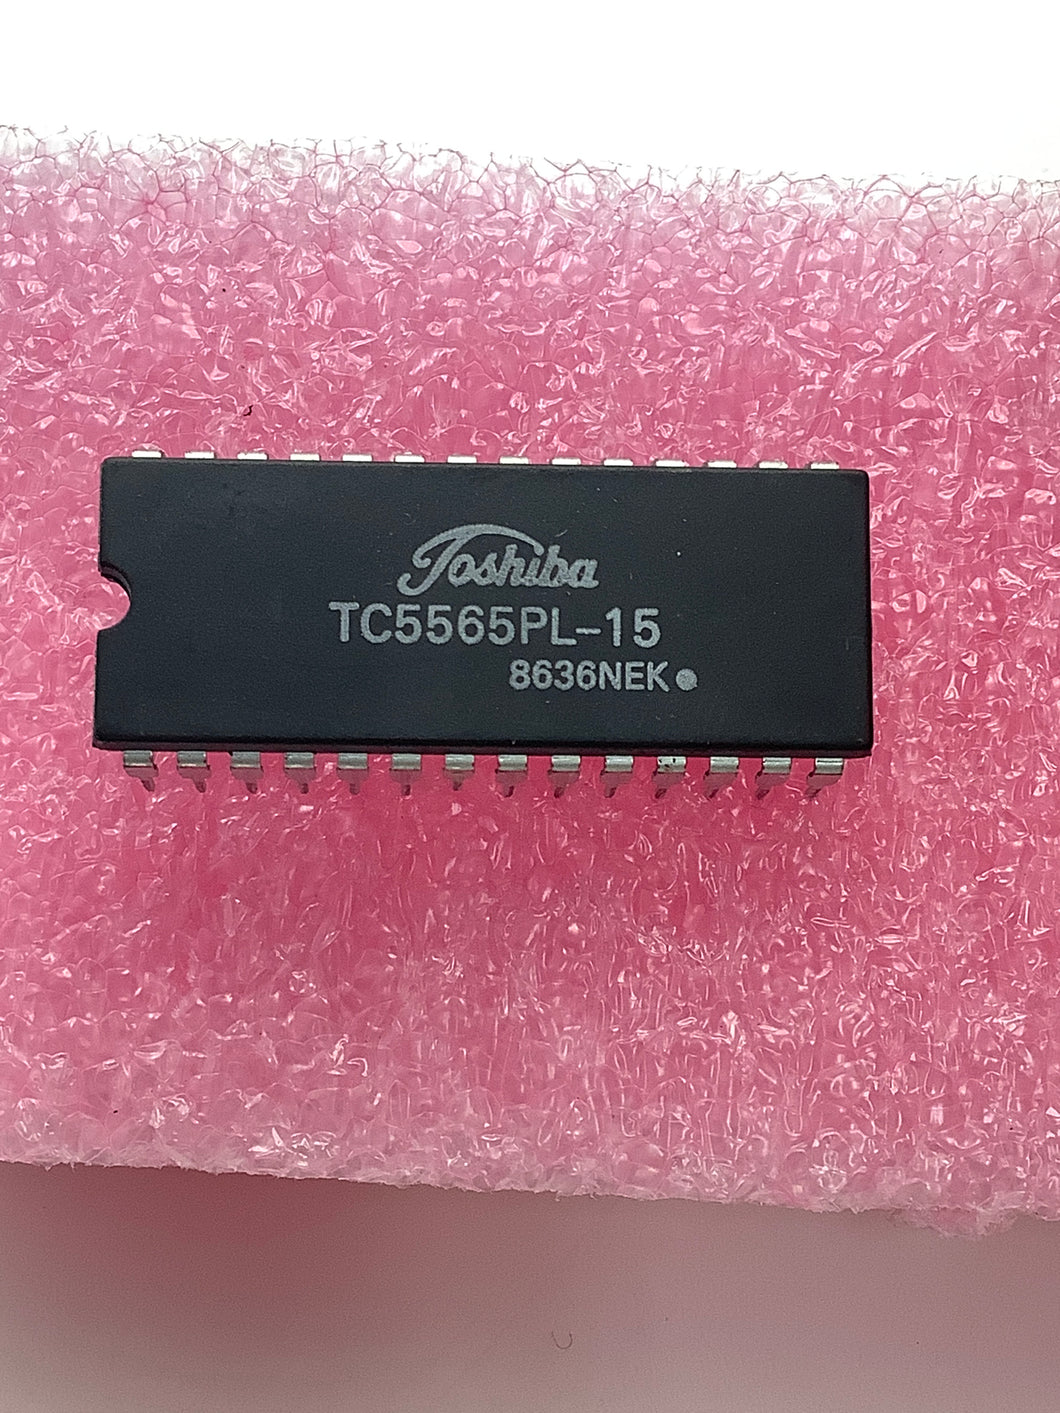 TC5565PL-15 - TOSHIBA - 65,536 bit static random access memory organized as 8,192 words by 8 bits using CMOS technology